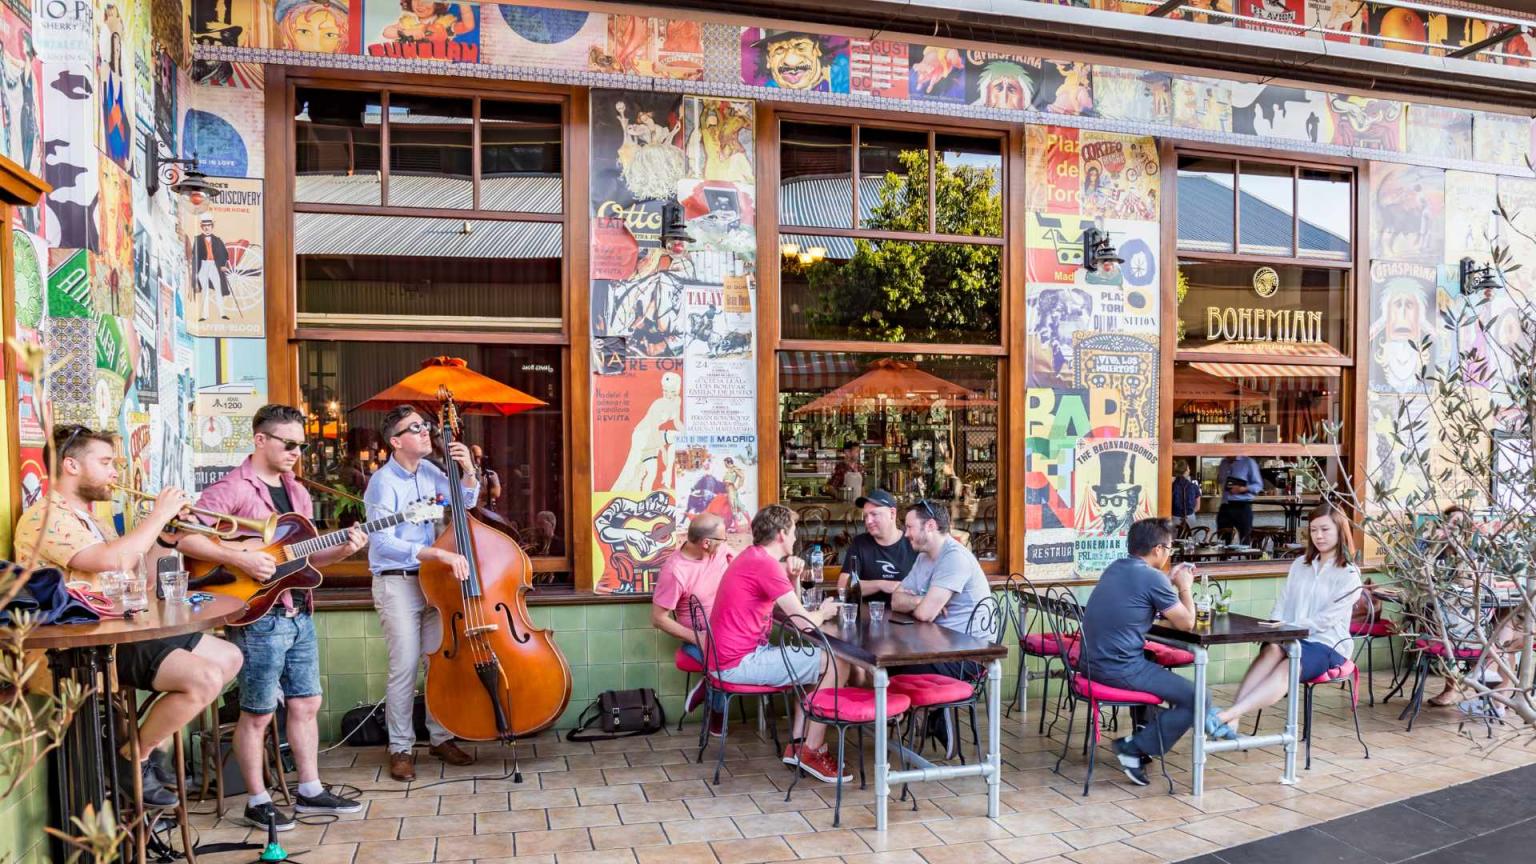 Melbourne Event Destination: Food, art and music scene on Melbourne streets.